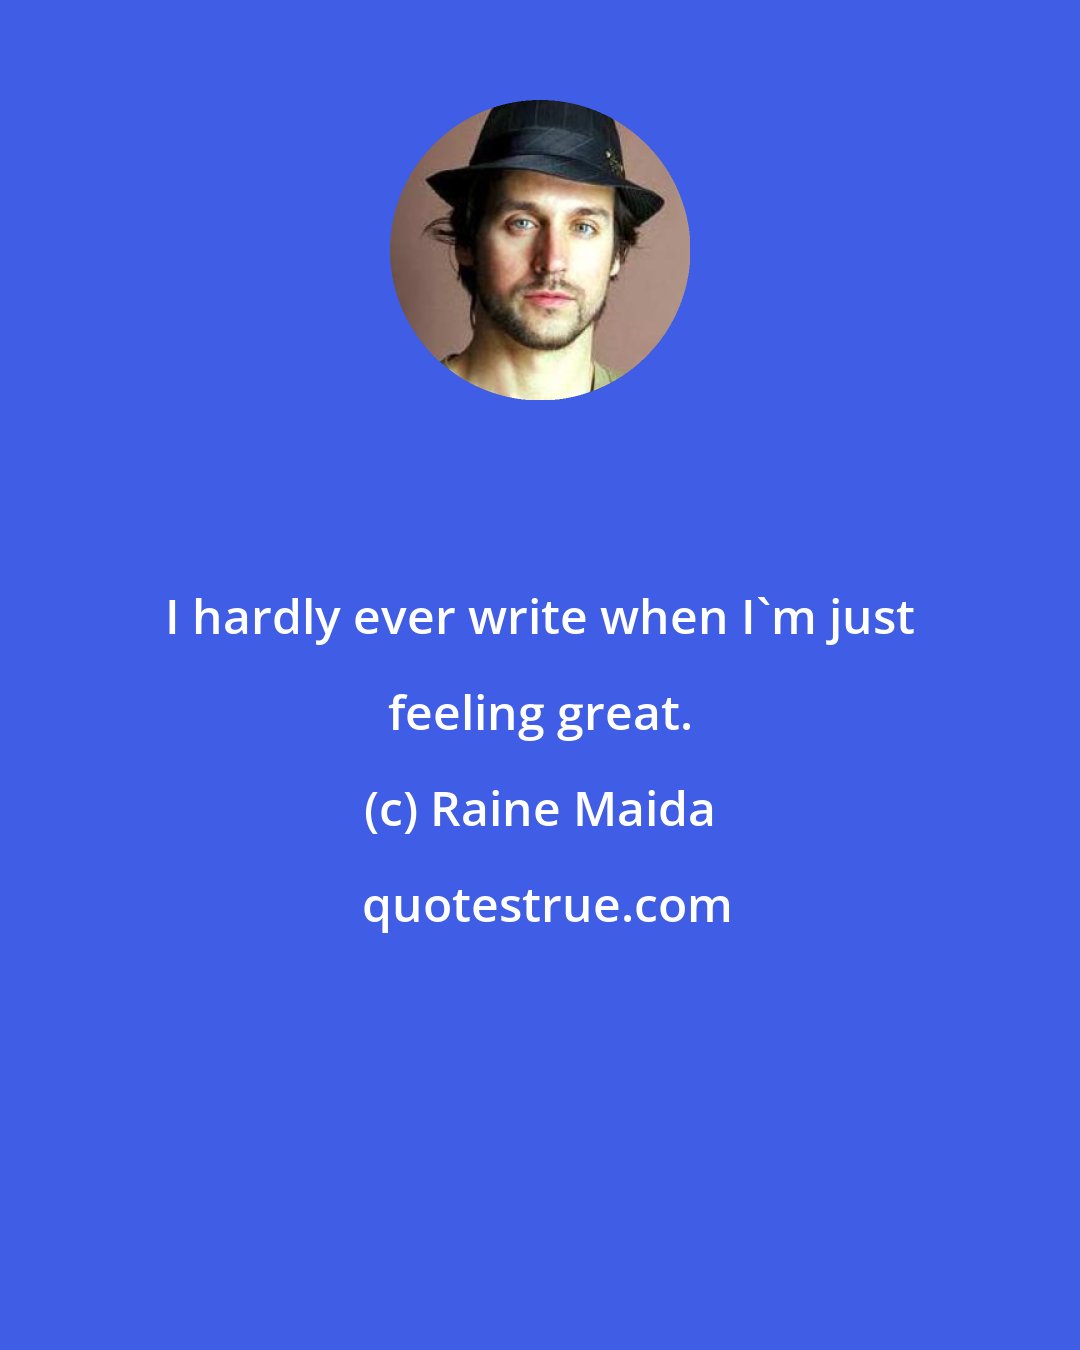 Raine Maida: I hardly ever write when I'm just feeling great.